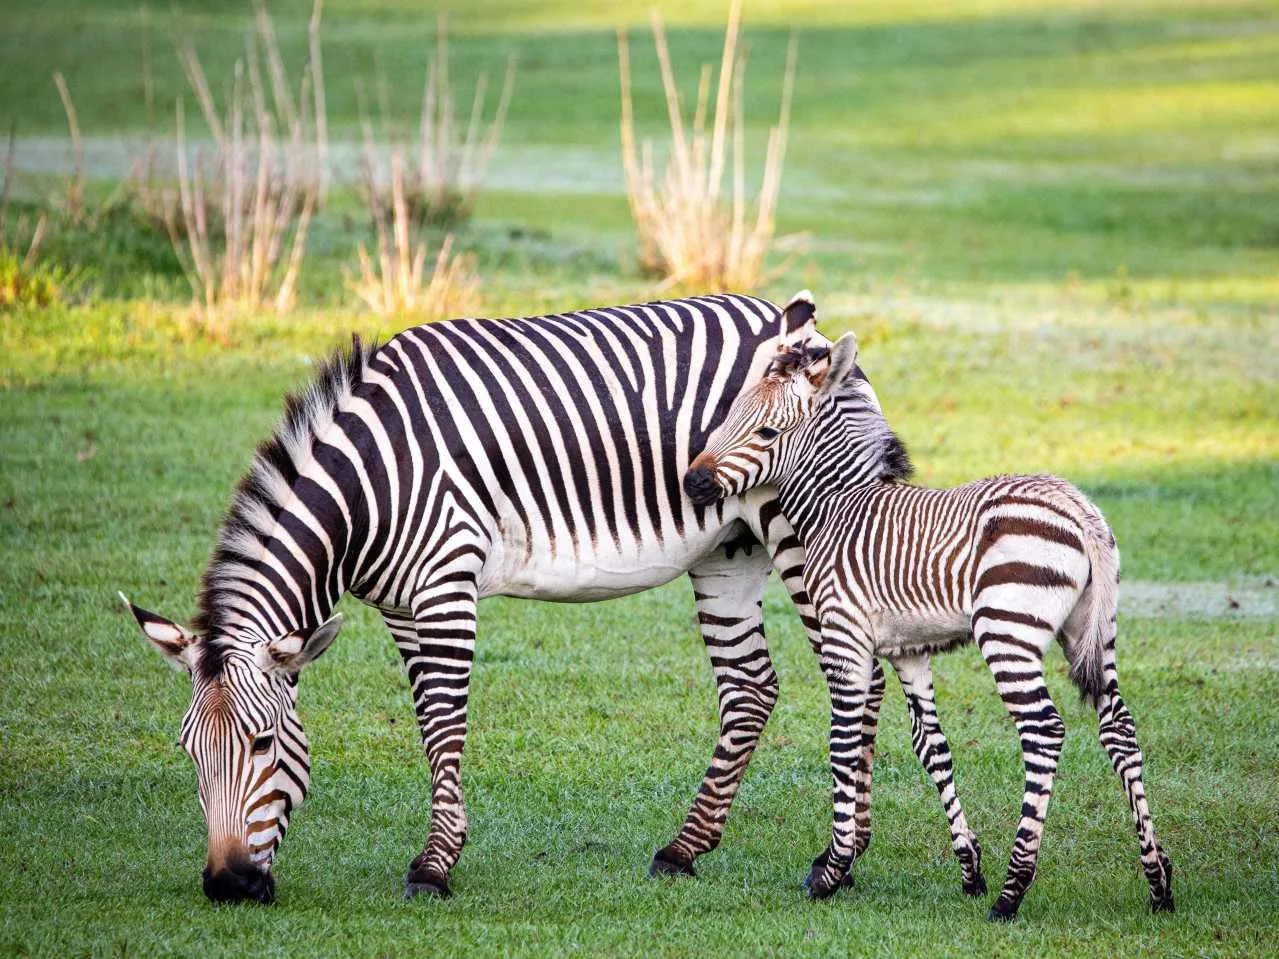 Zebra with her calf